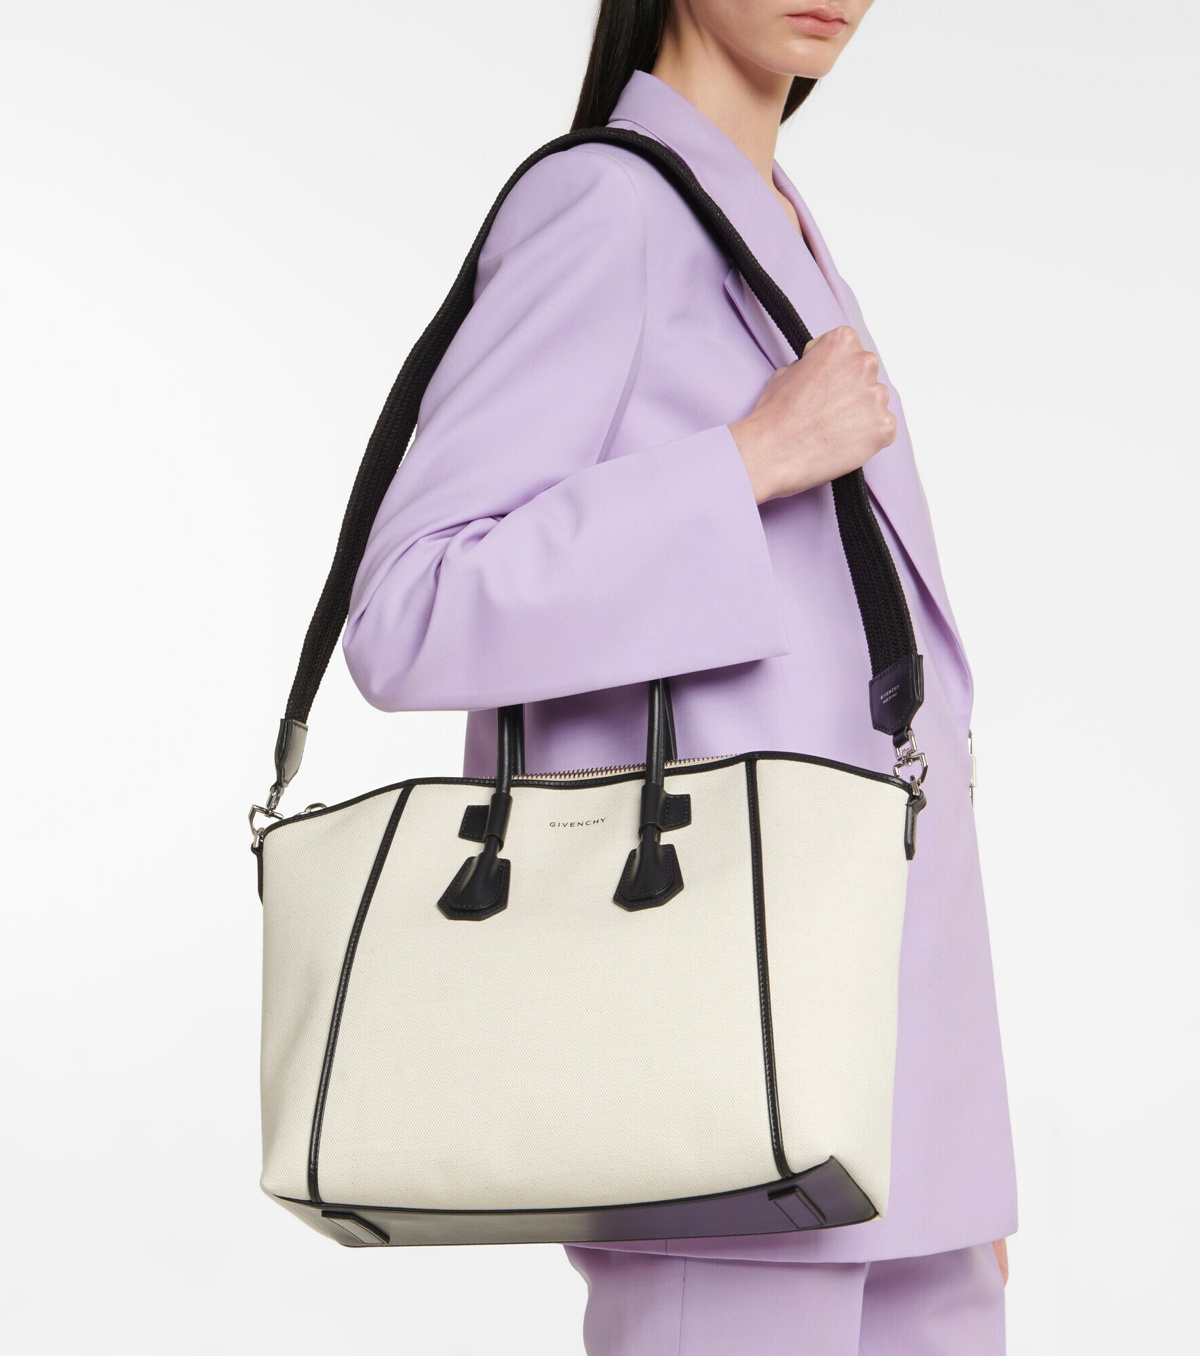 Givenchy - Mini Antigona Sport Bag in Leather